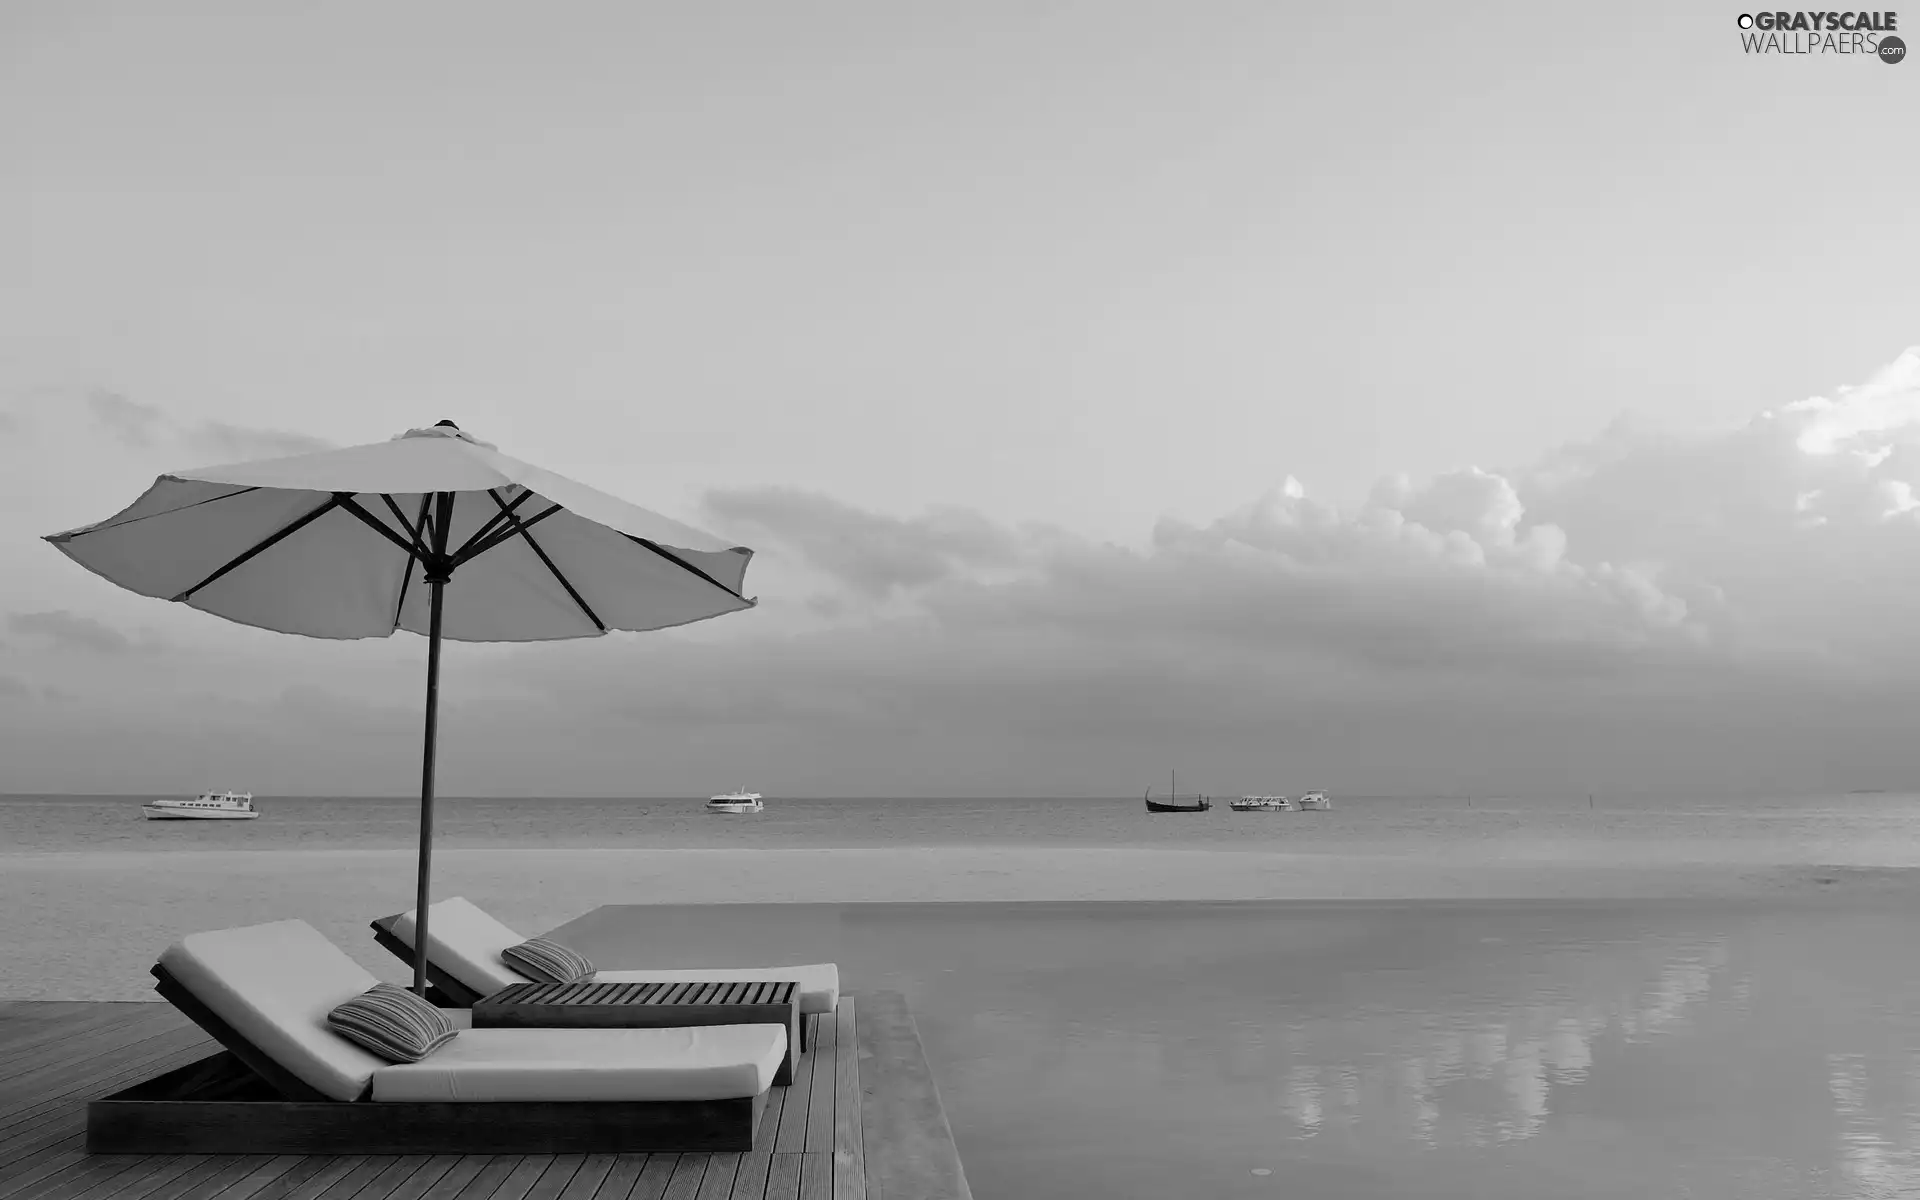 sea, Umbrella, holiday, deck chair